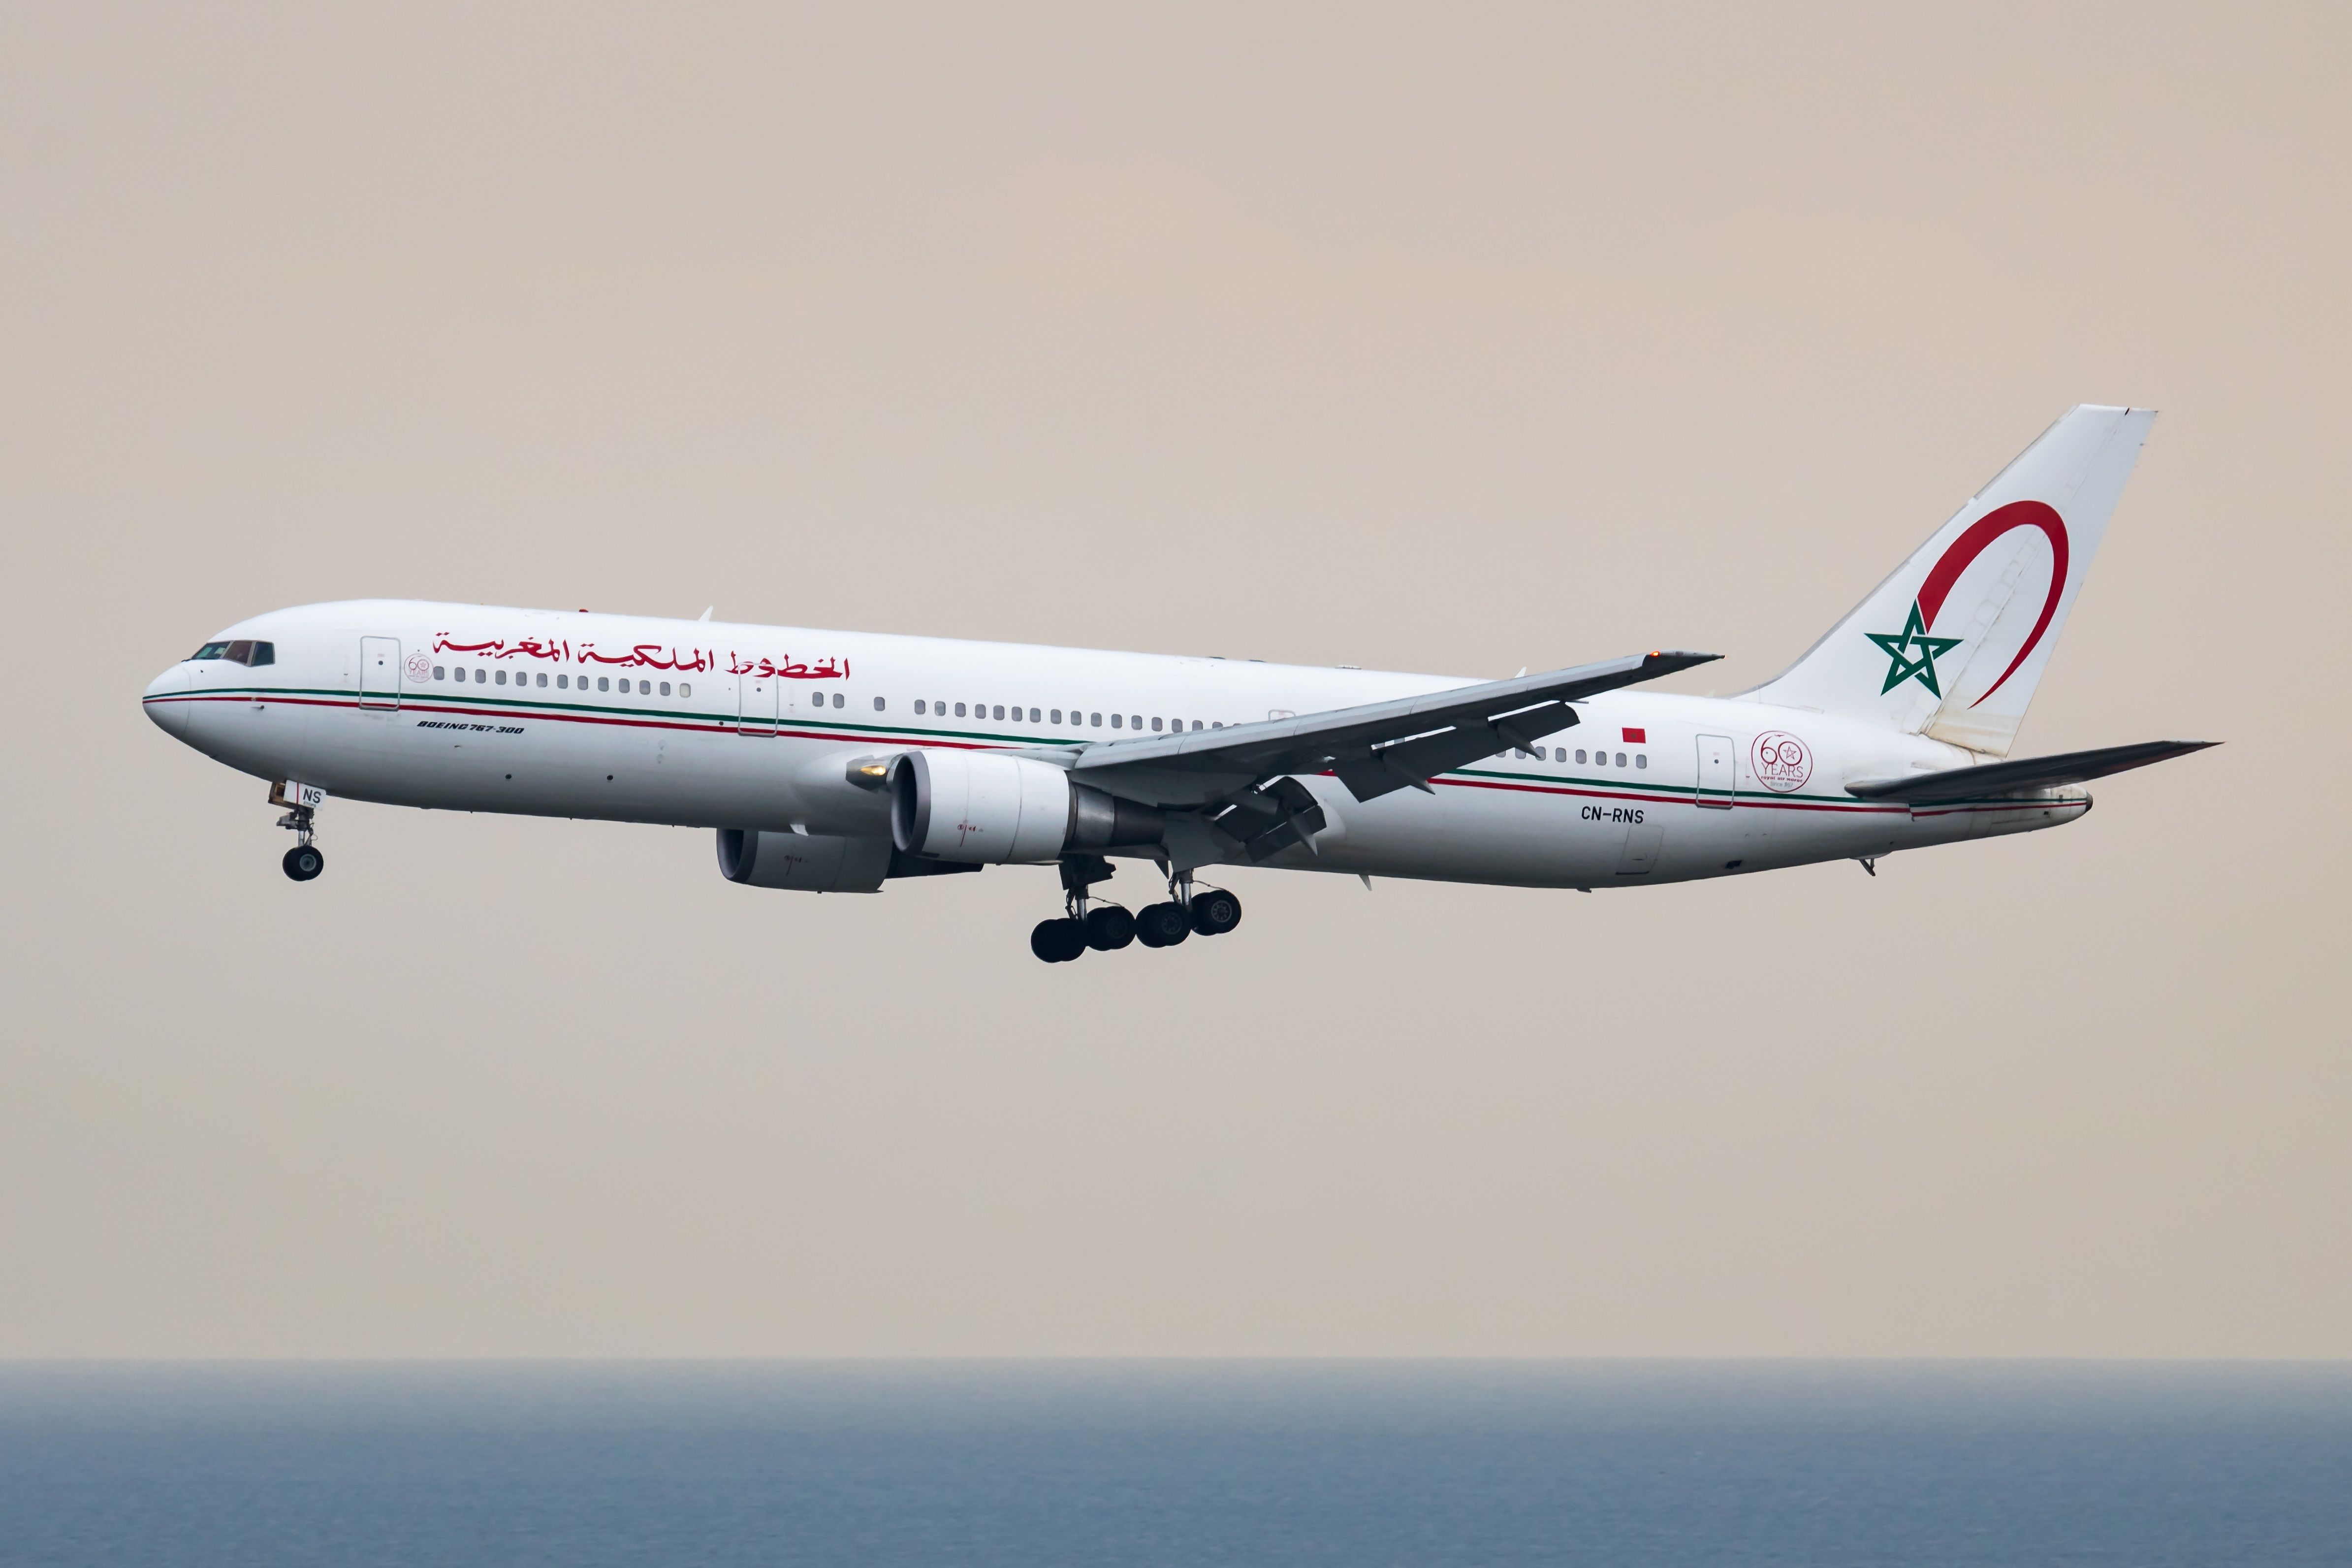 Royal Air Maroc 767 landing